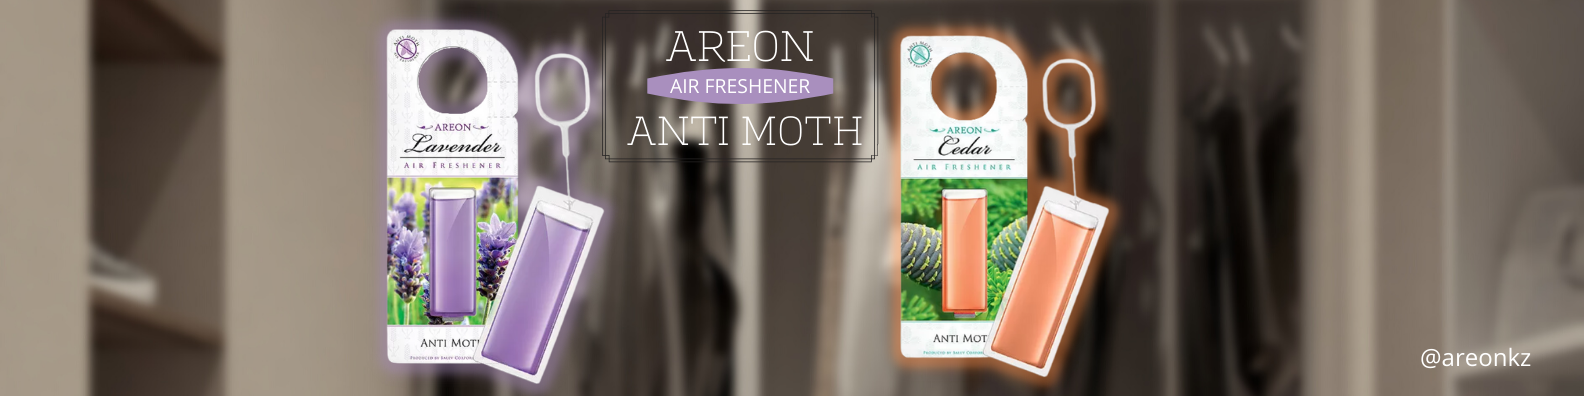 Areon Anti Moth